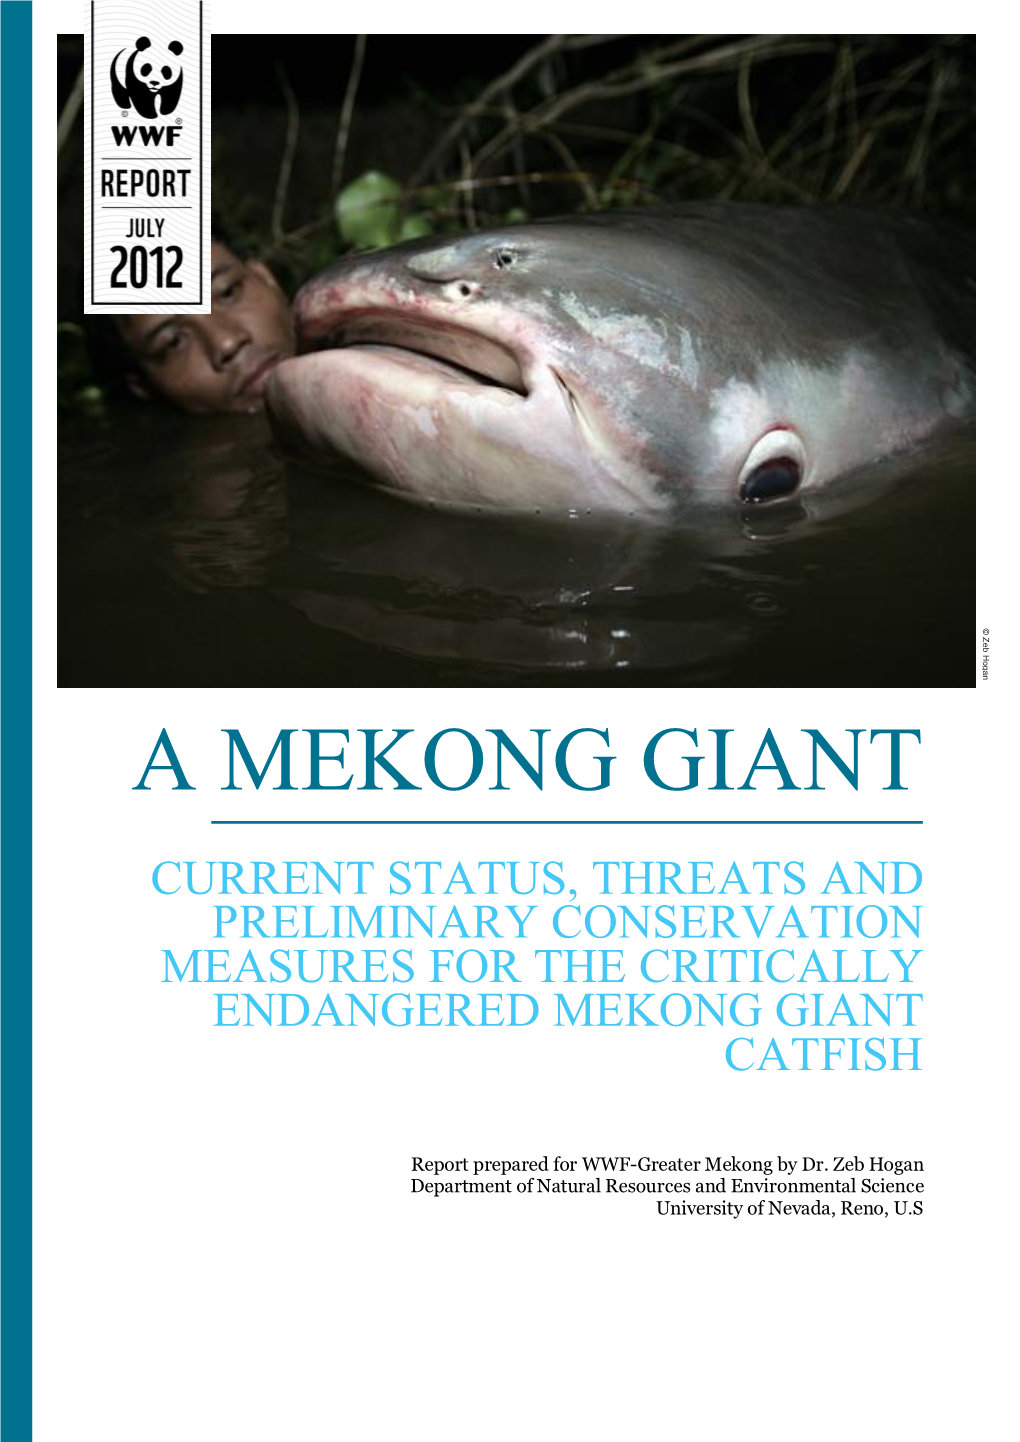 Mekong Giant Catfish Report English Pdf 1.18 MB